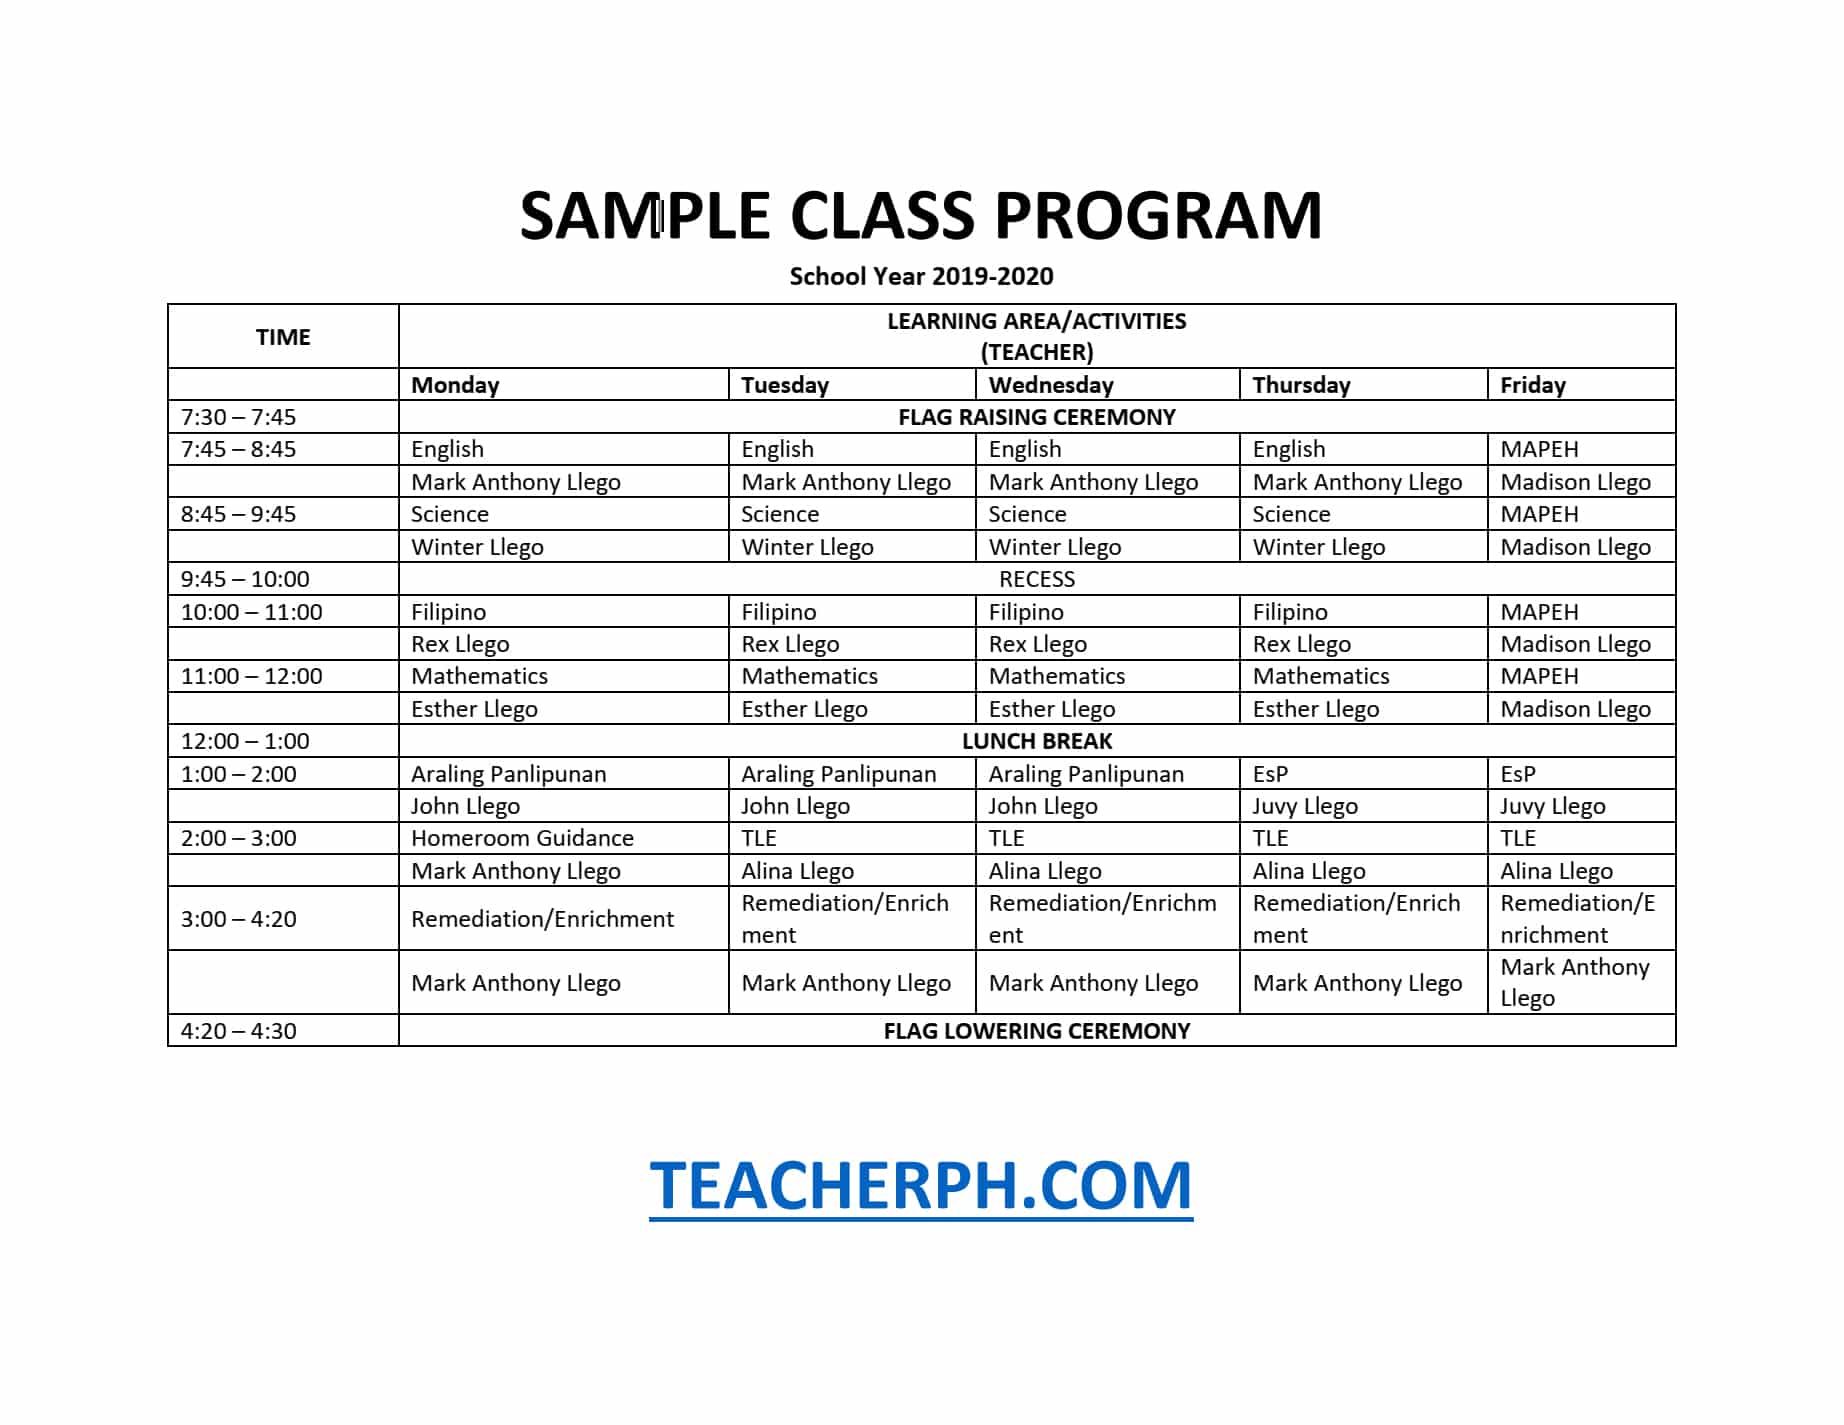 Deped Sample Class Program And Teachers Schedule Teacherph Images And Photos Finder